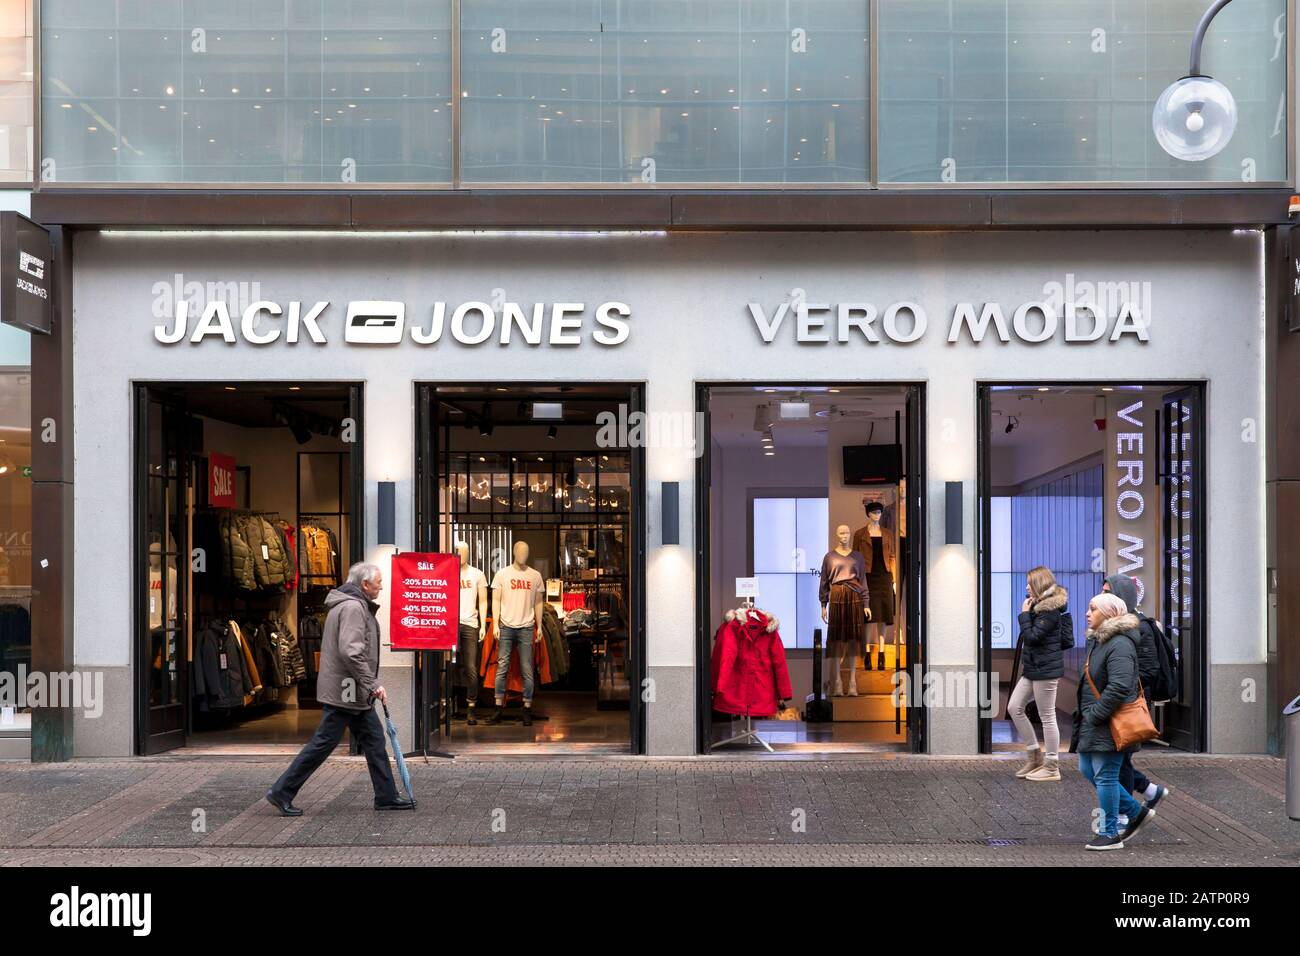 Jack & Jones e vero Moda negozi sulla via dello shopping Schildergasse,  Colonia, Germania. Jack & Jones und vero Moda Laeden auf der  Einkaufsstrasse S Foto stock - Alamy